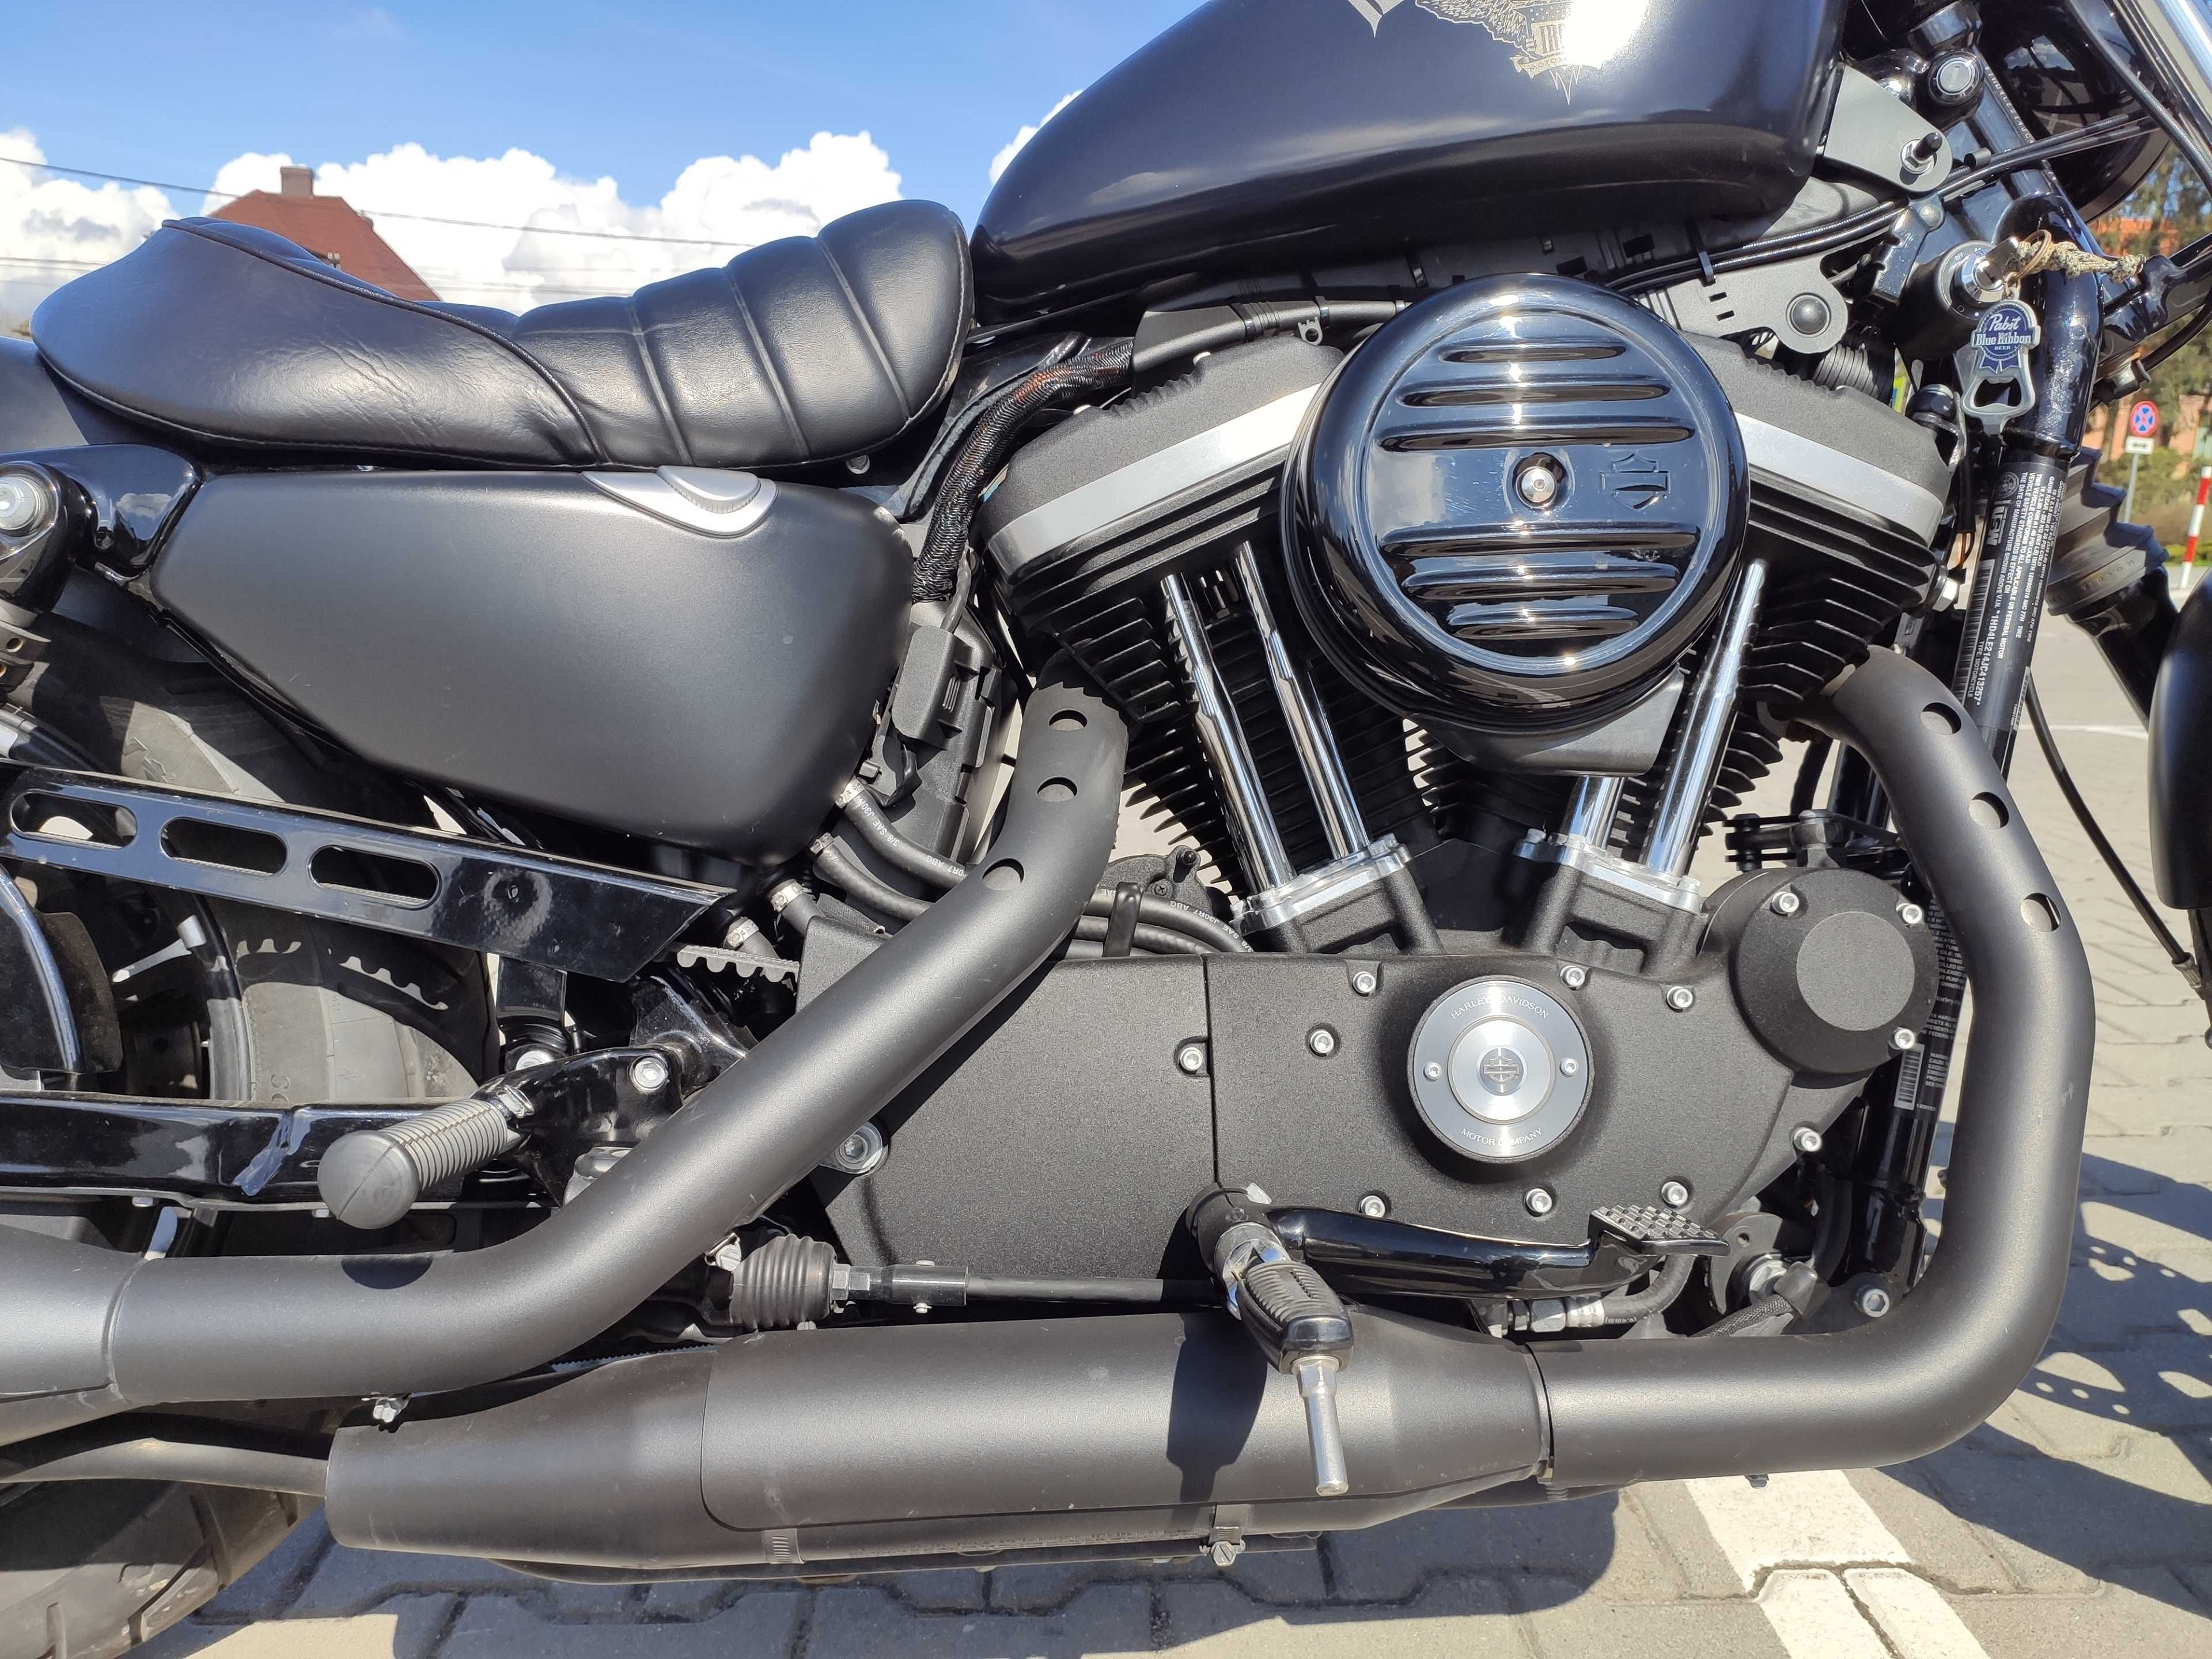 Harley Davidson Sportster XL 883 N Iron